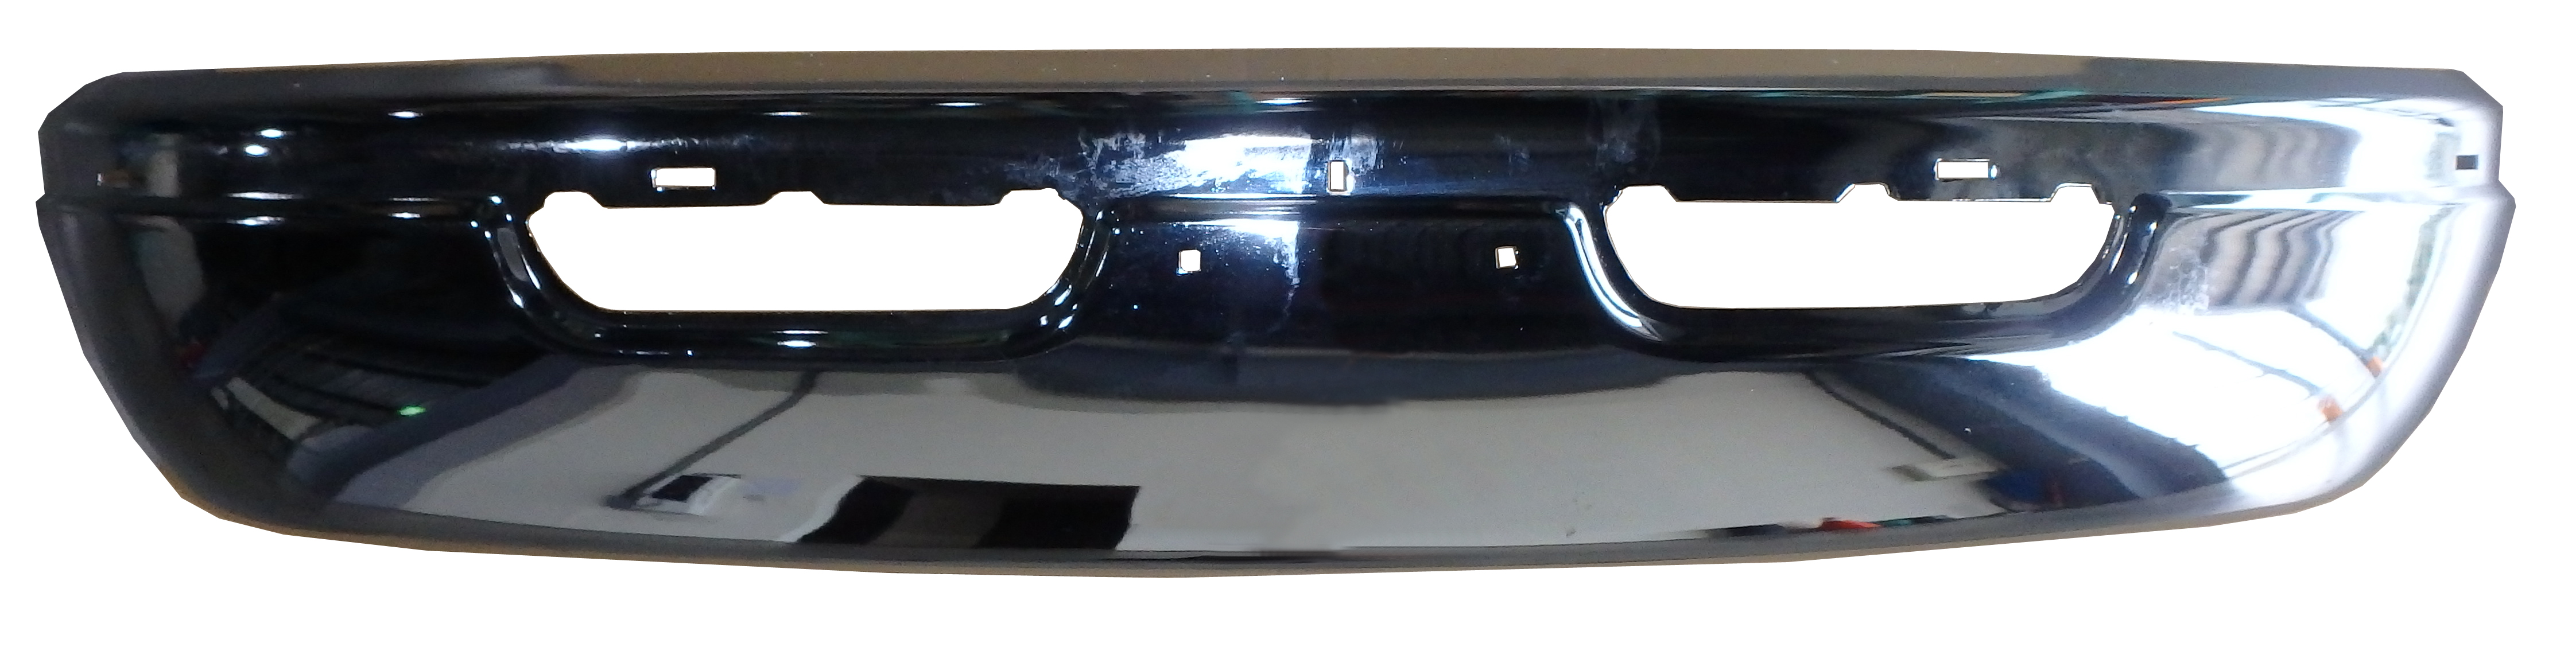 Aftermarket METAL FRONT BUMPERS for DODGE - B2500, B2500,98-98,Front bumper face bar